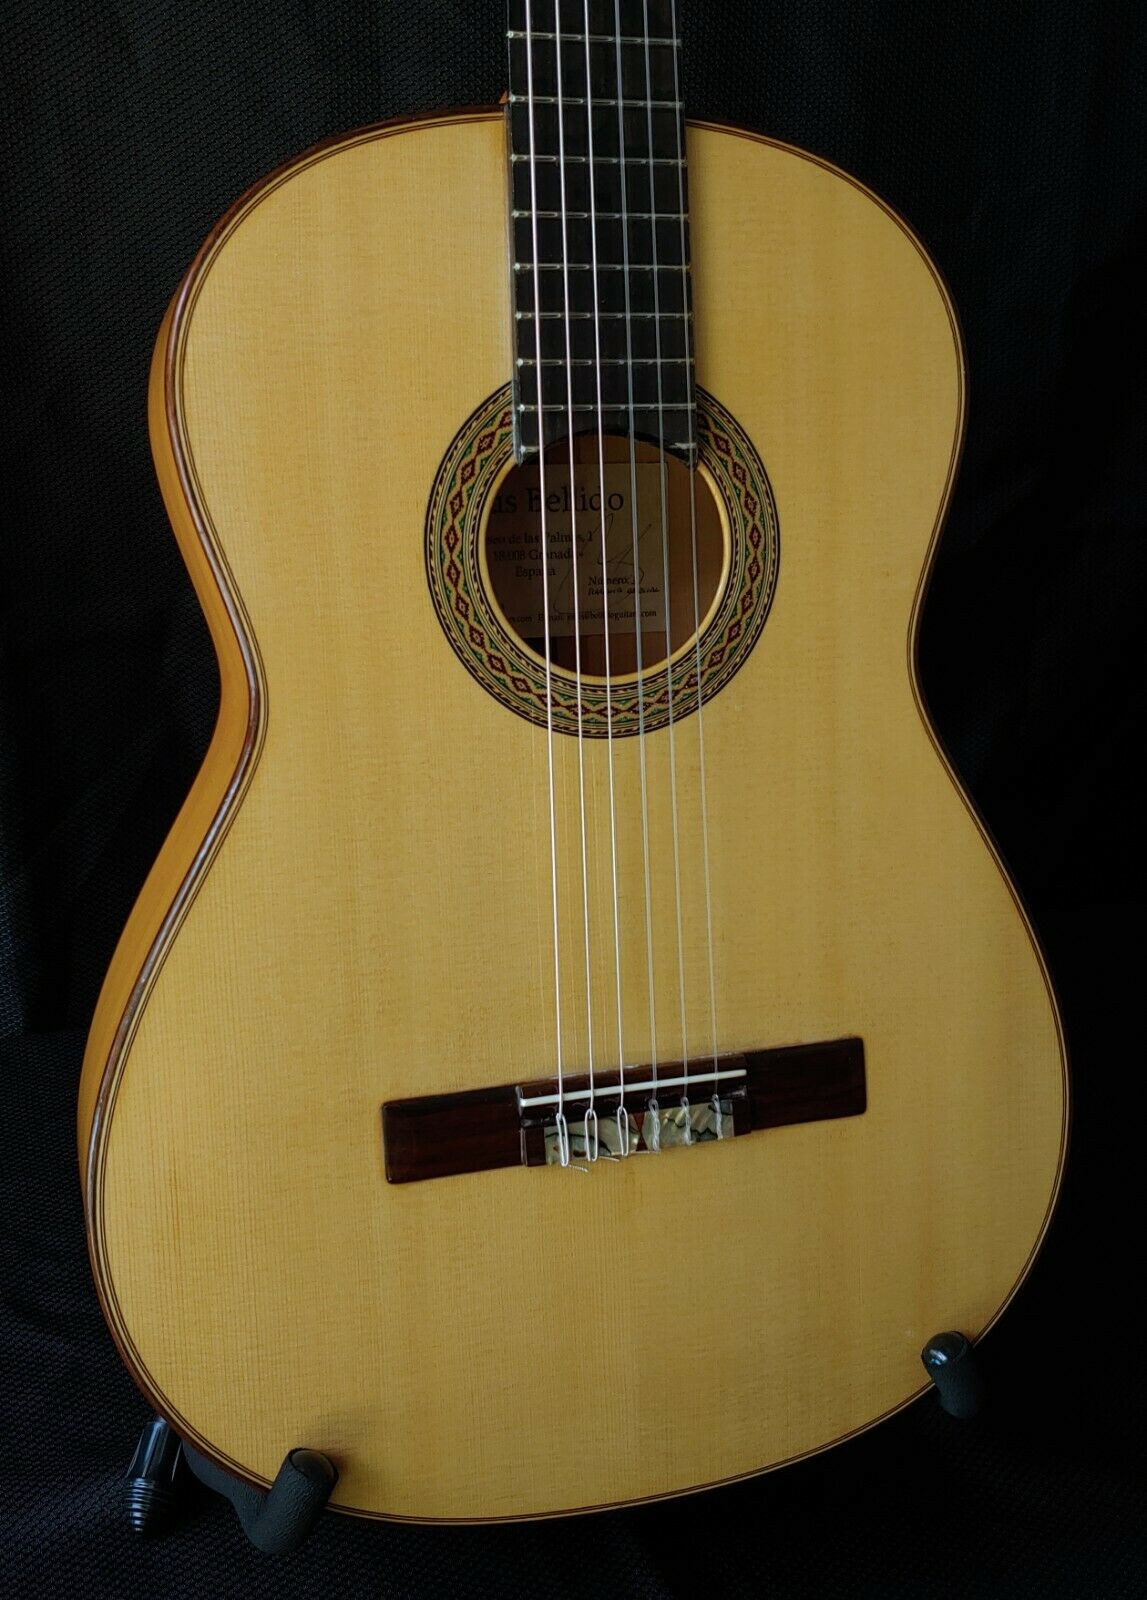 2010 Jesus Bellido Especial Cypress And Spruce Flamenco Guitar